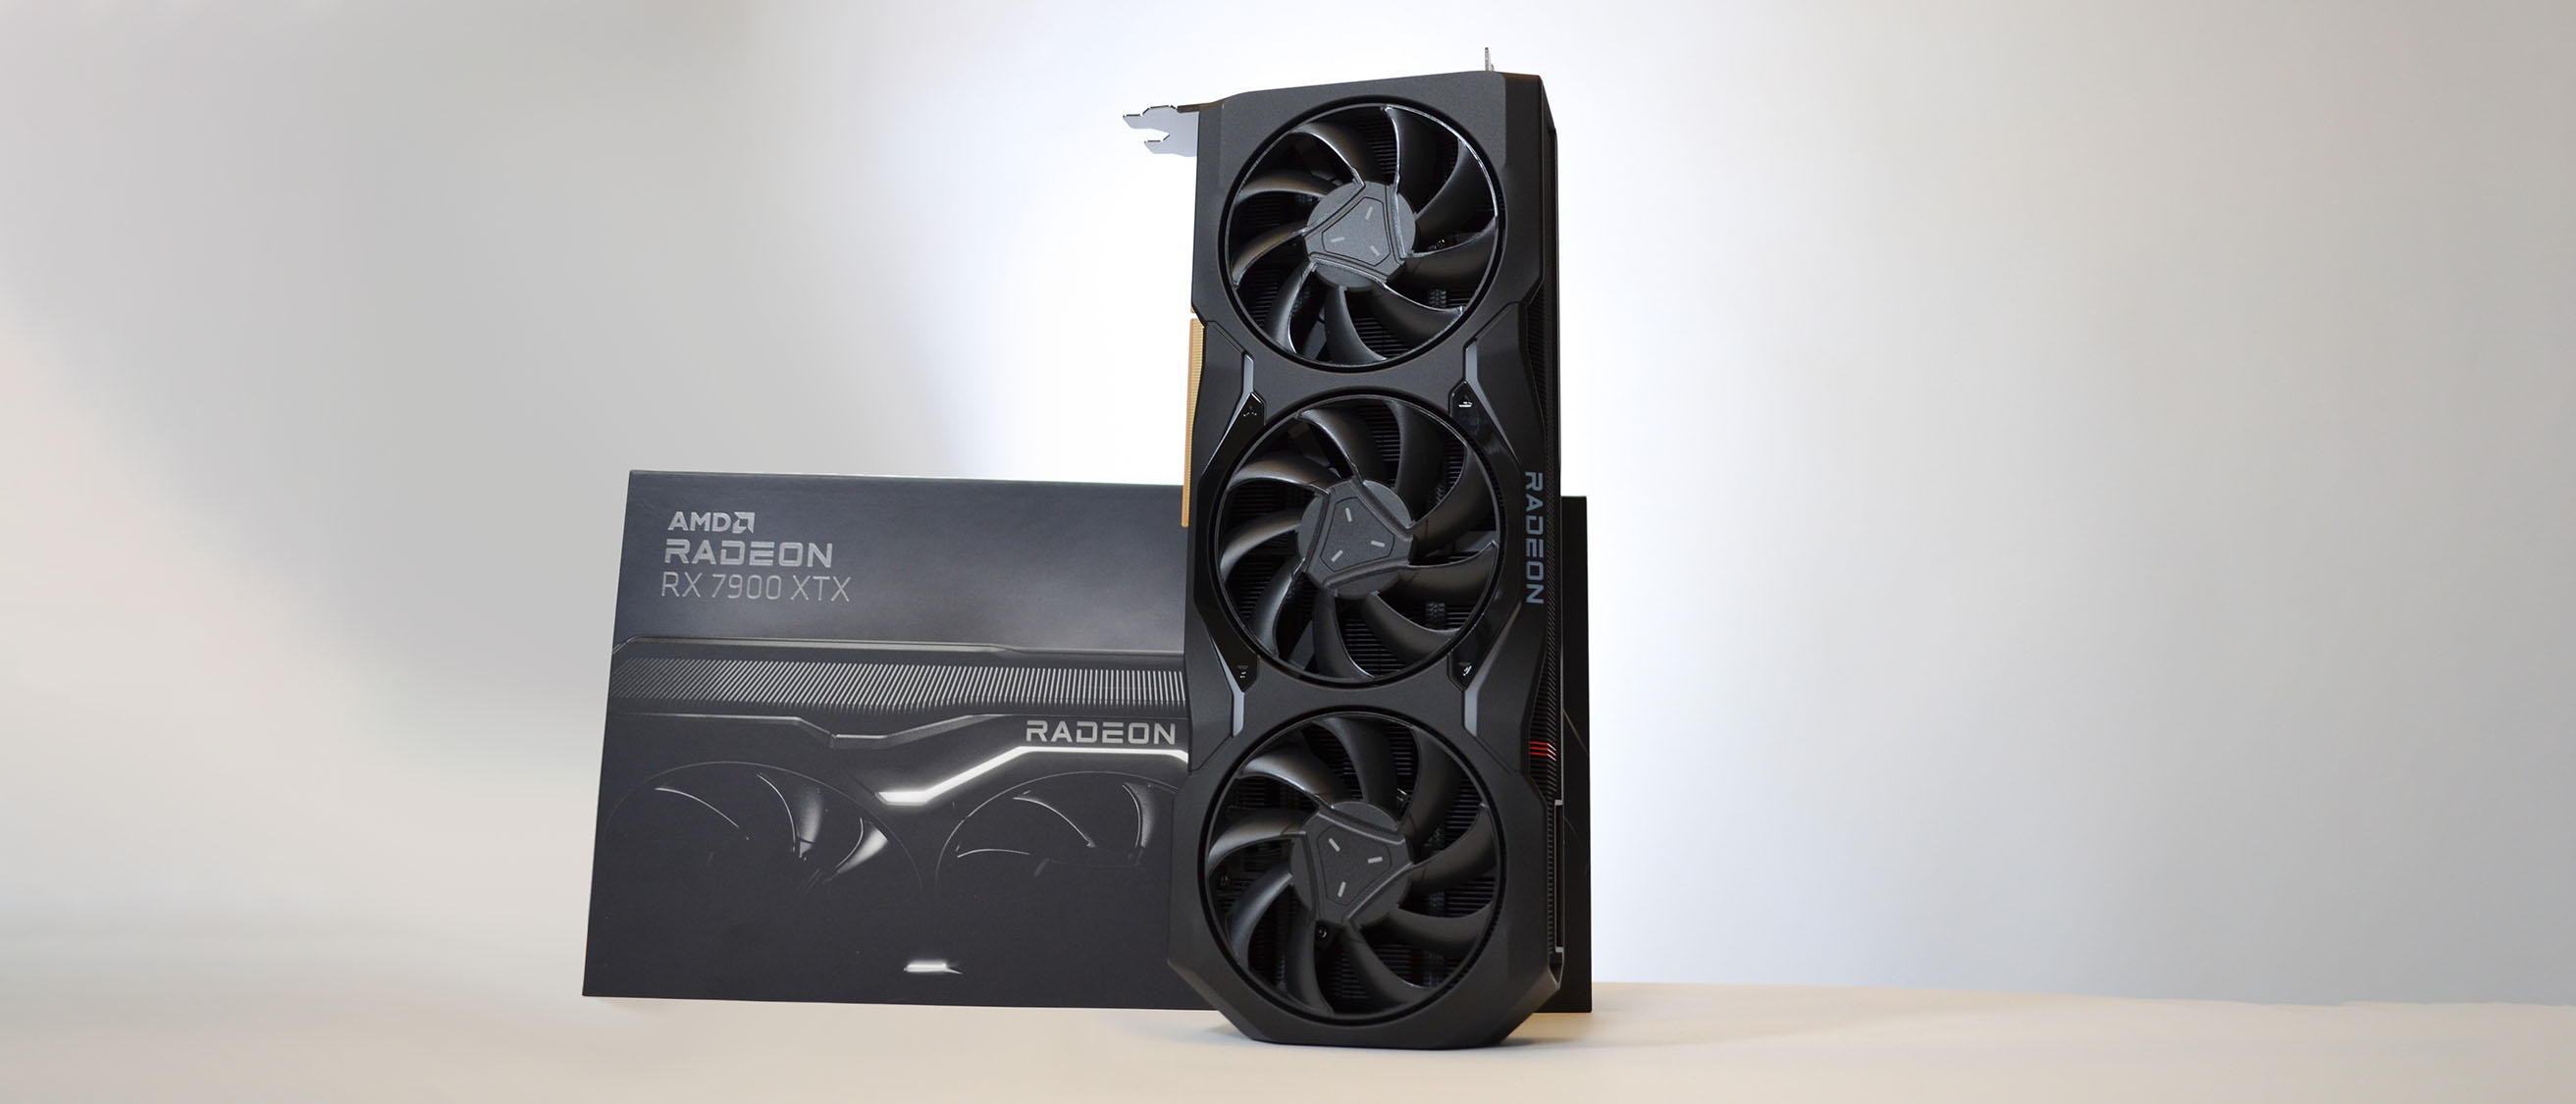 AMD Radeon RX 7900 XTX/XT reviews go live on December 12th, a day